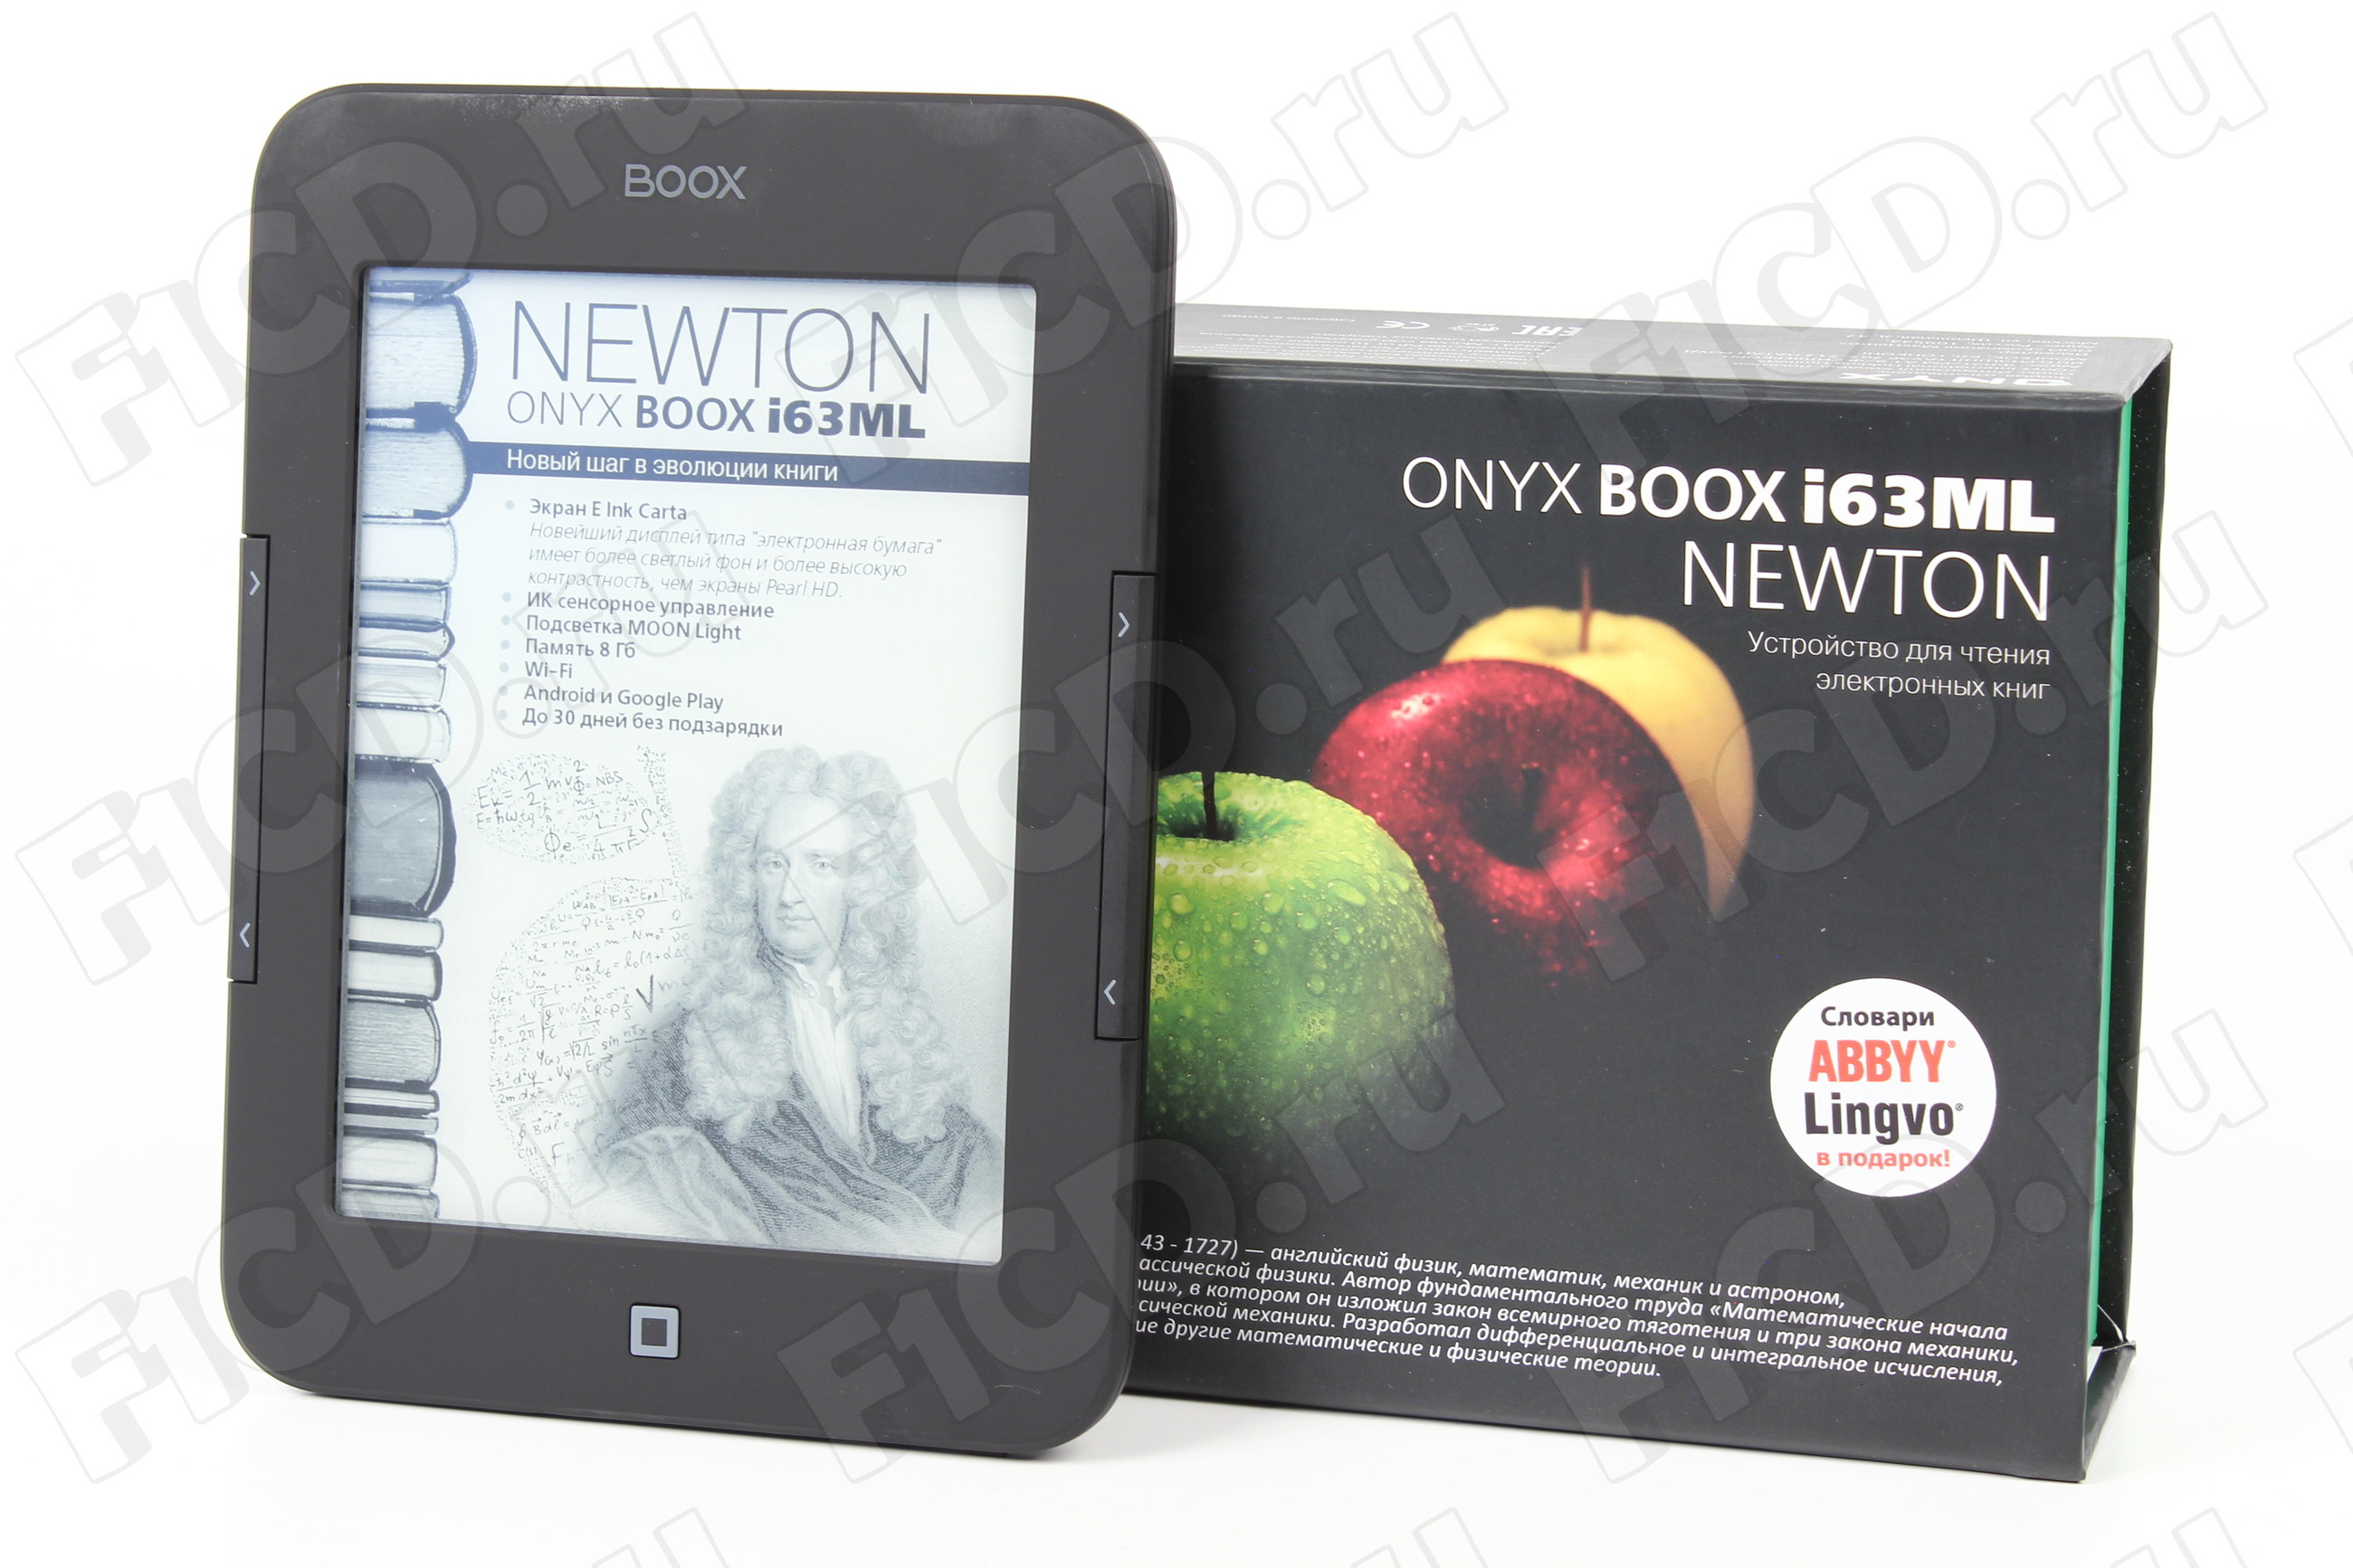 Onyx BOOX i63ml Newton. Универсальный чехол Onyx BOOX i63ml Maxwell. Onyx BOOX i63ml Newton аккумулятор. Ньютон мл